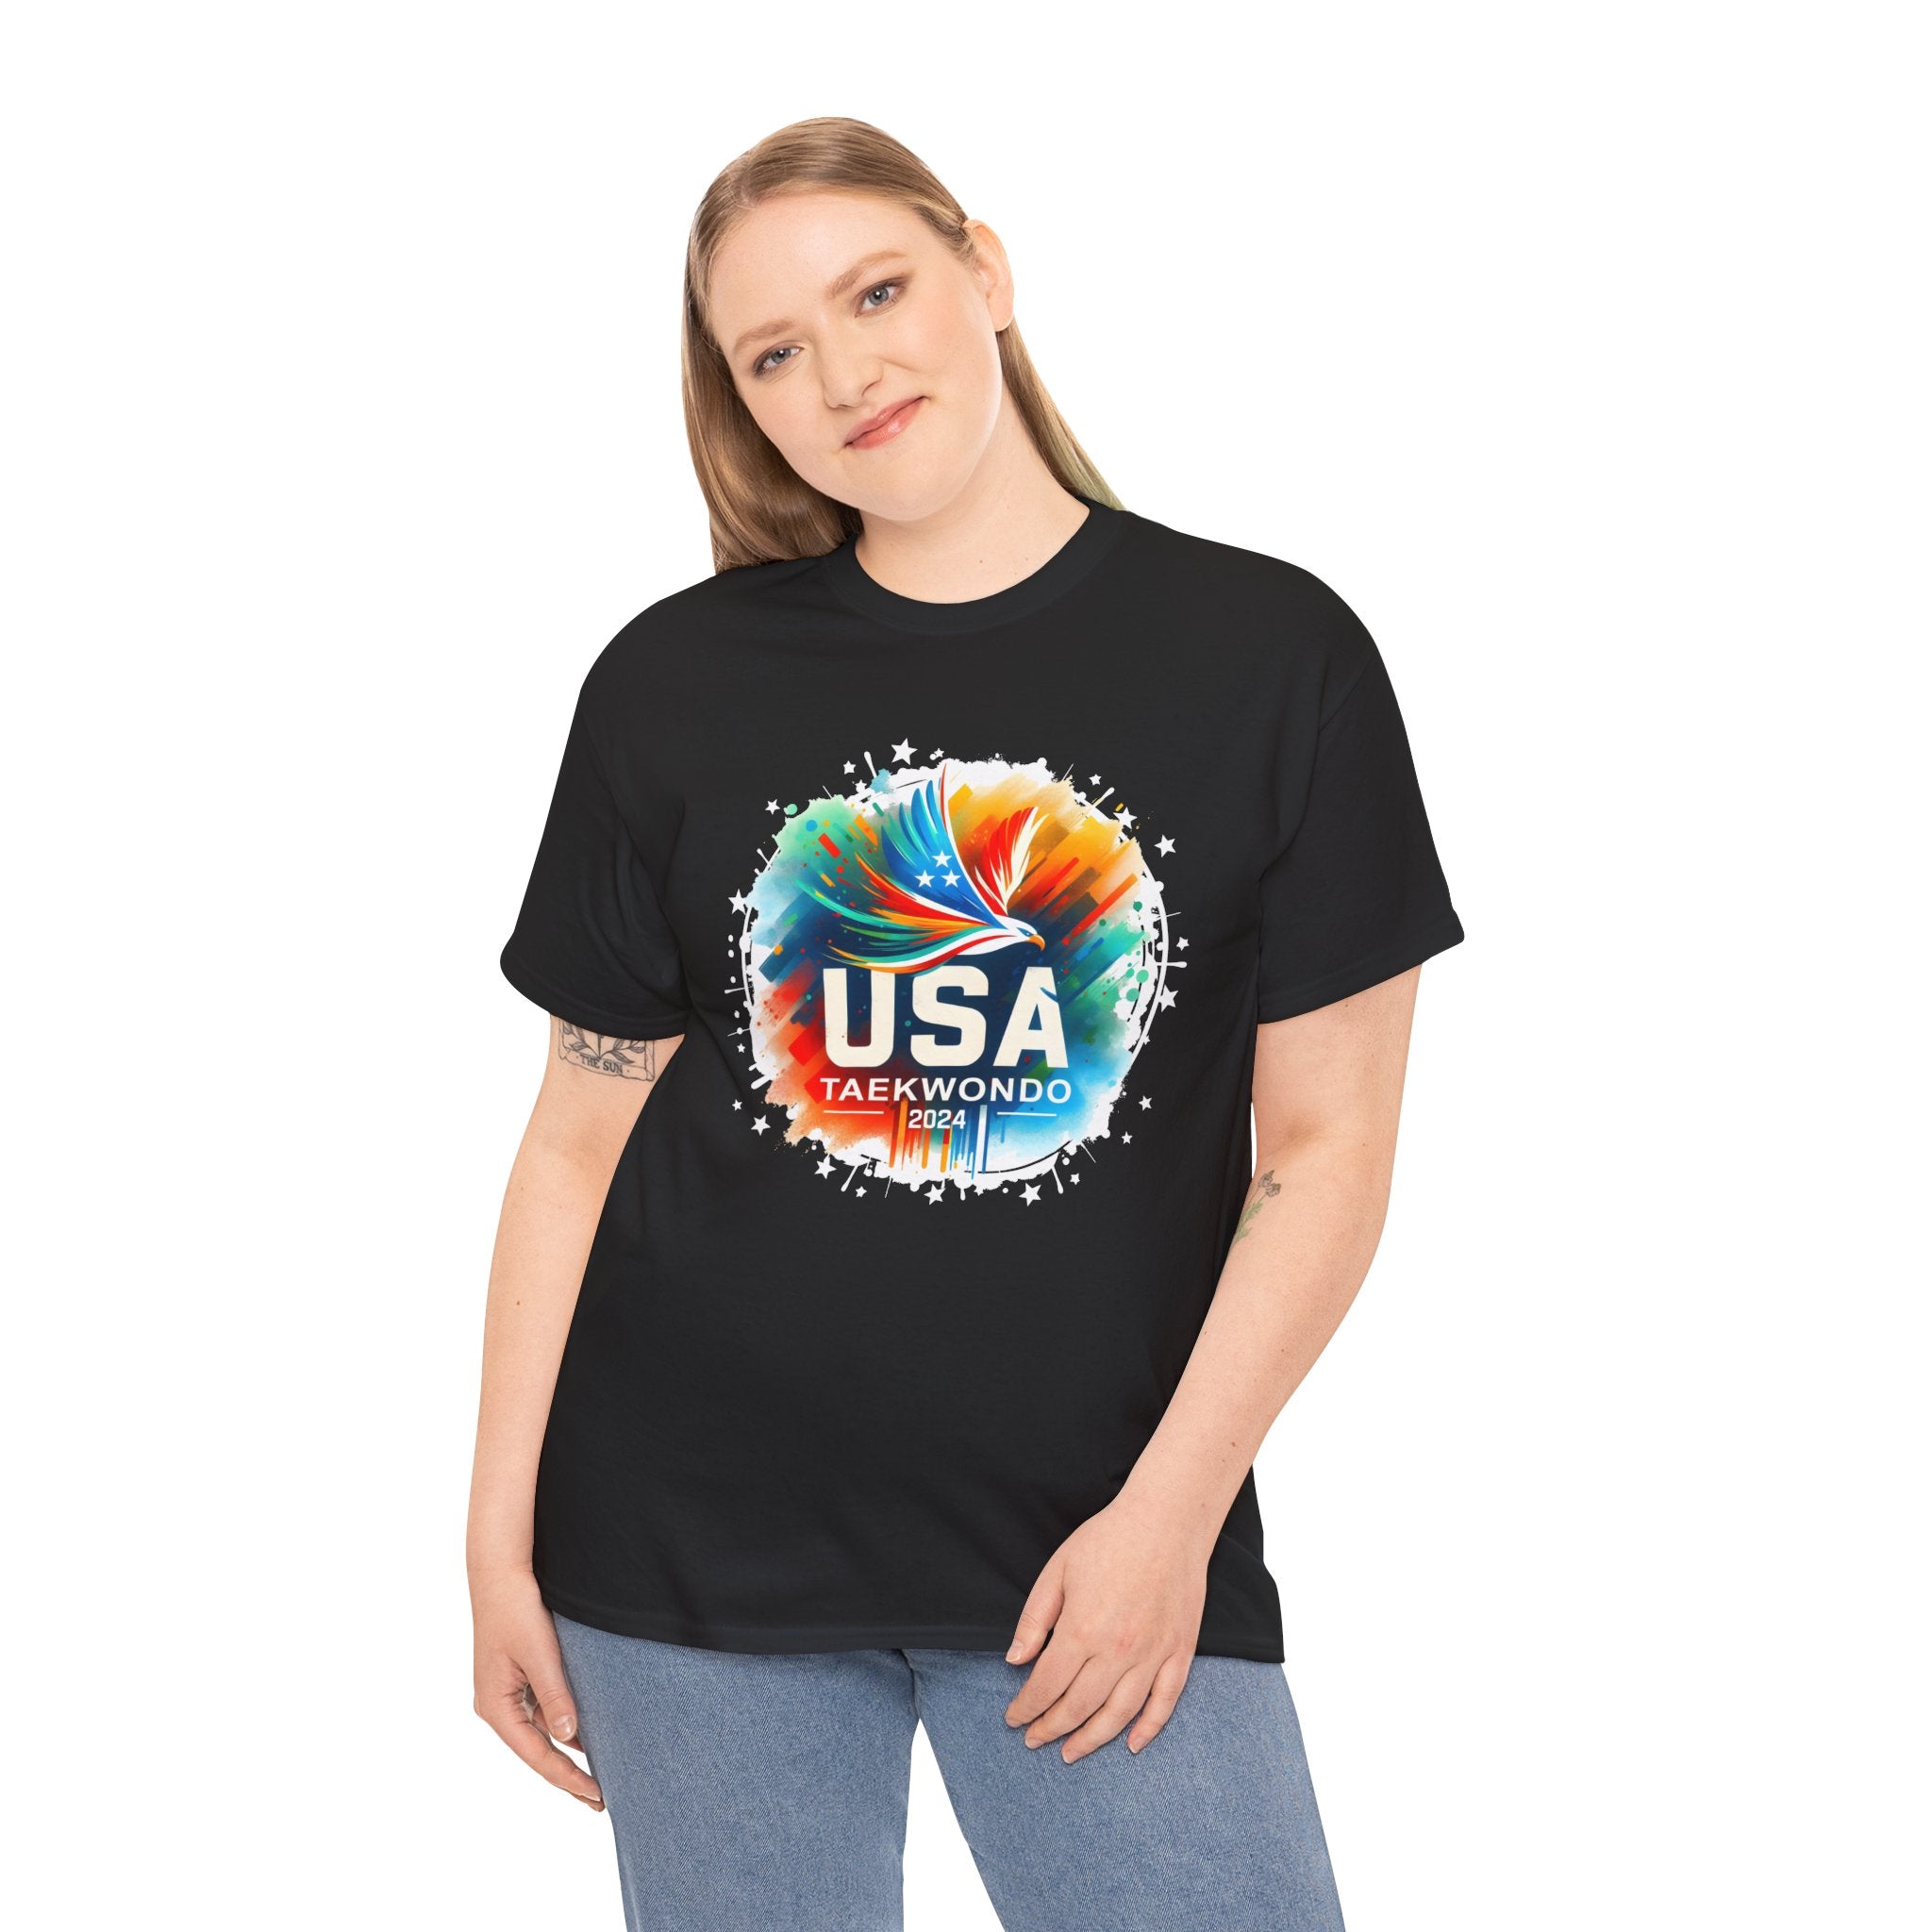 USA 2024 Go United States Taekwondo Sport USA Team 2024 USA Plus Size Shirts for Women